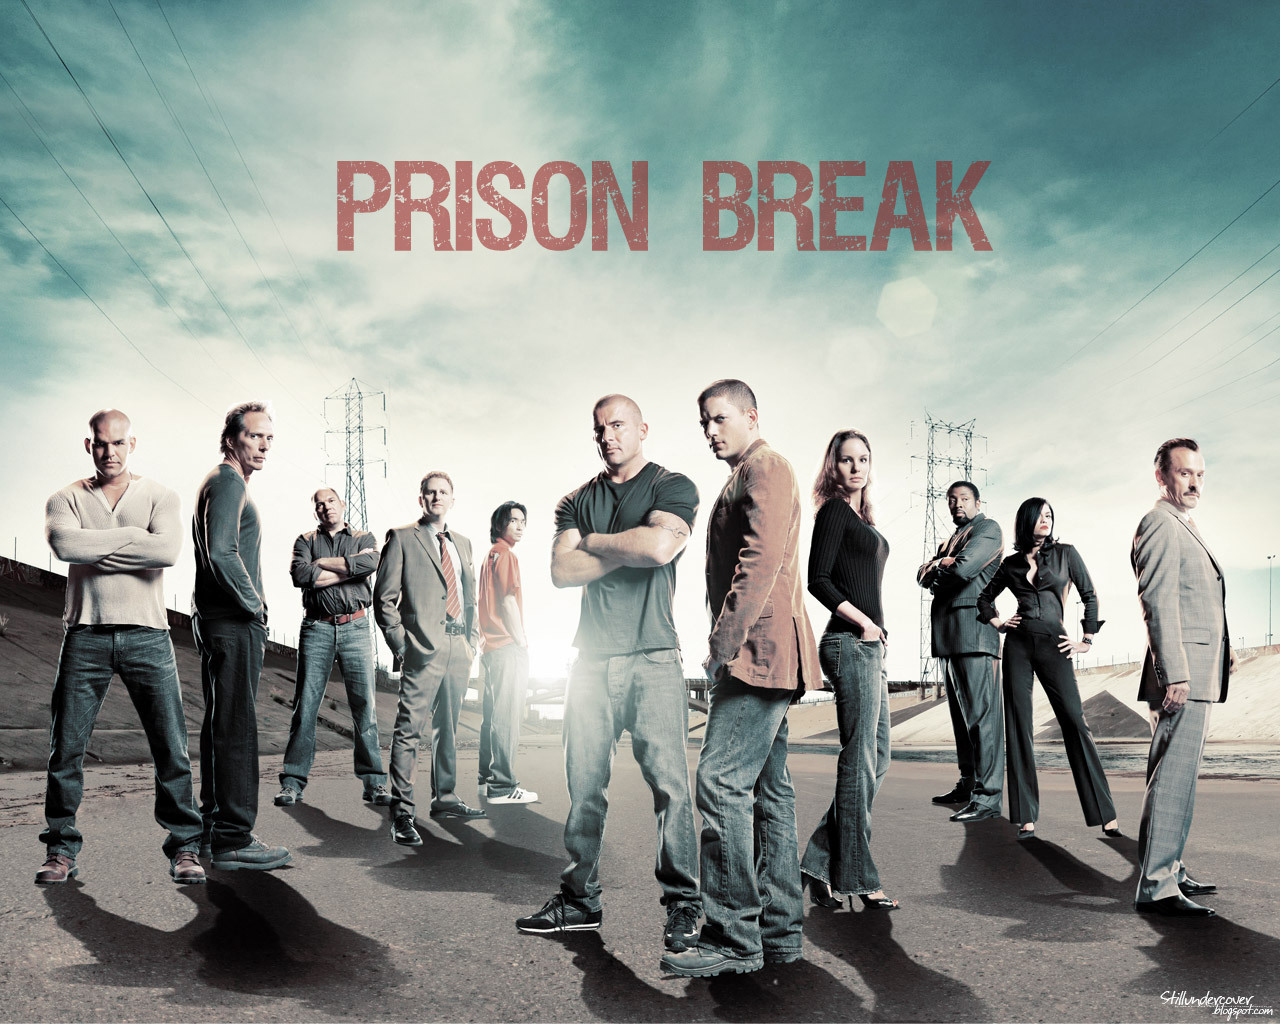 prison break season 6 download utorrent